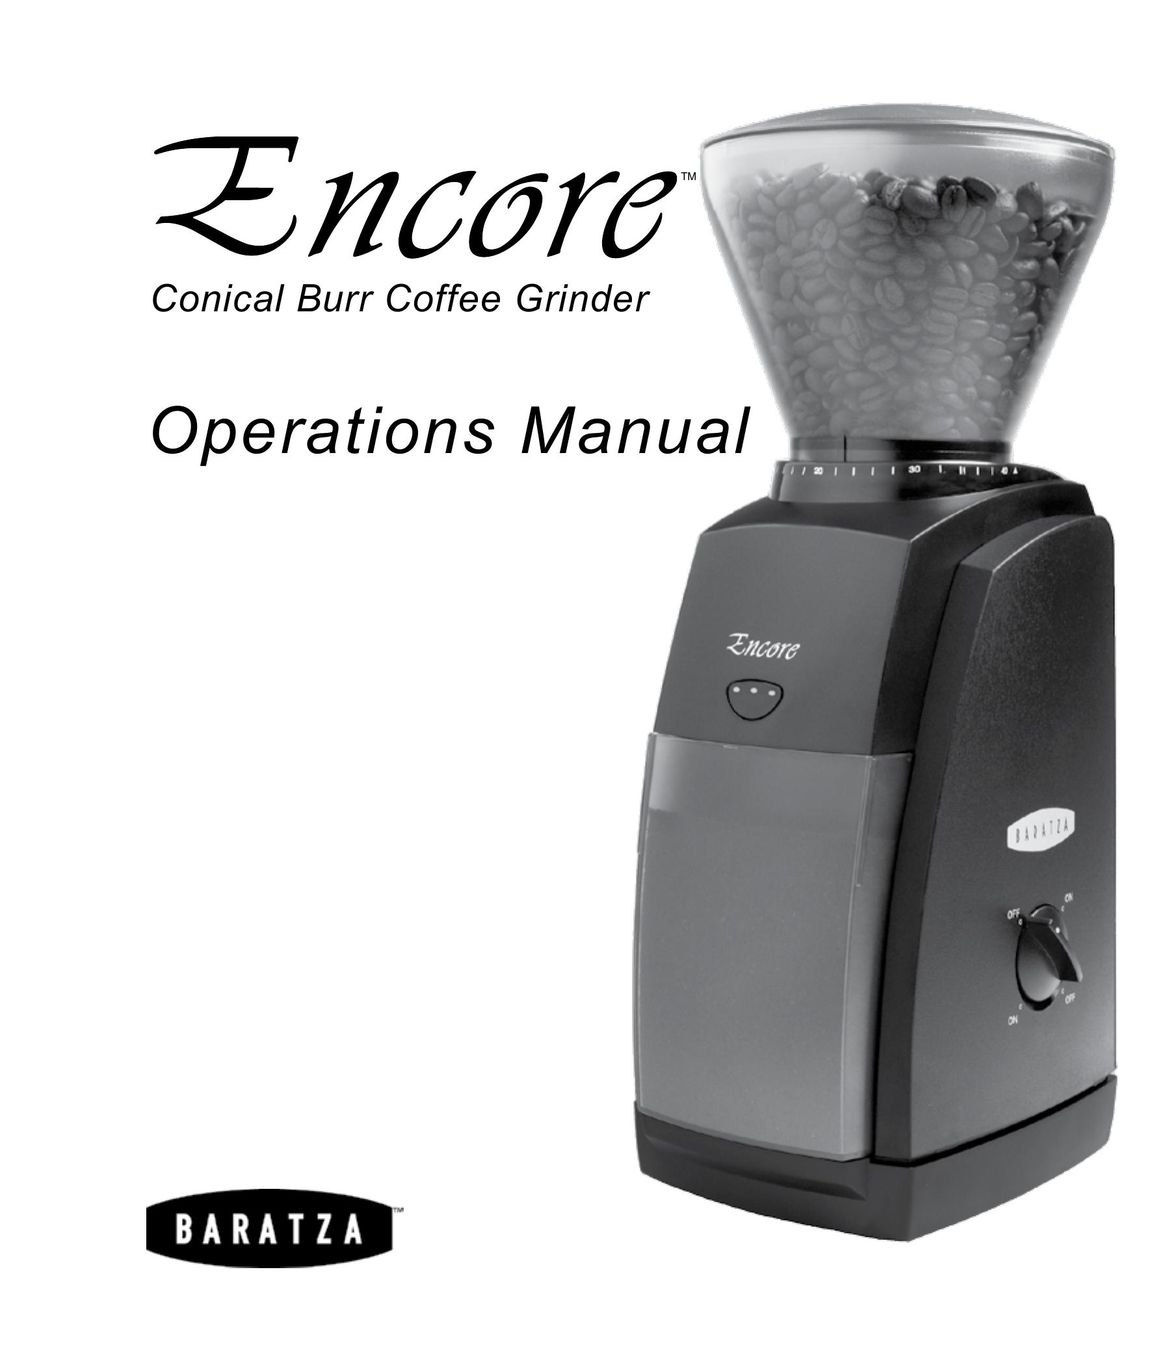 Baratza G385 Coffeemaker User Manual